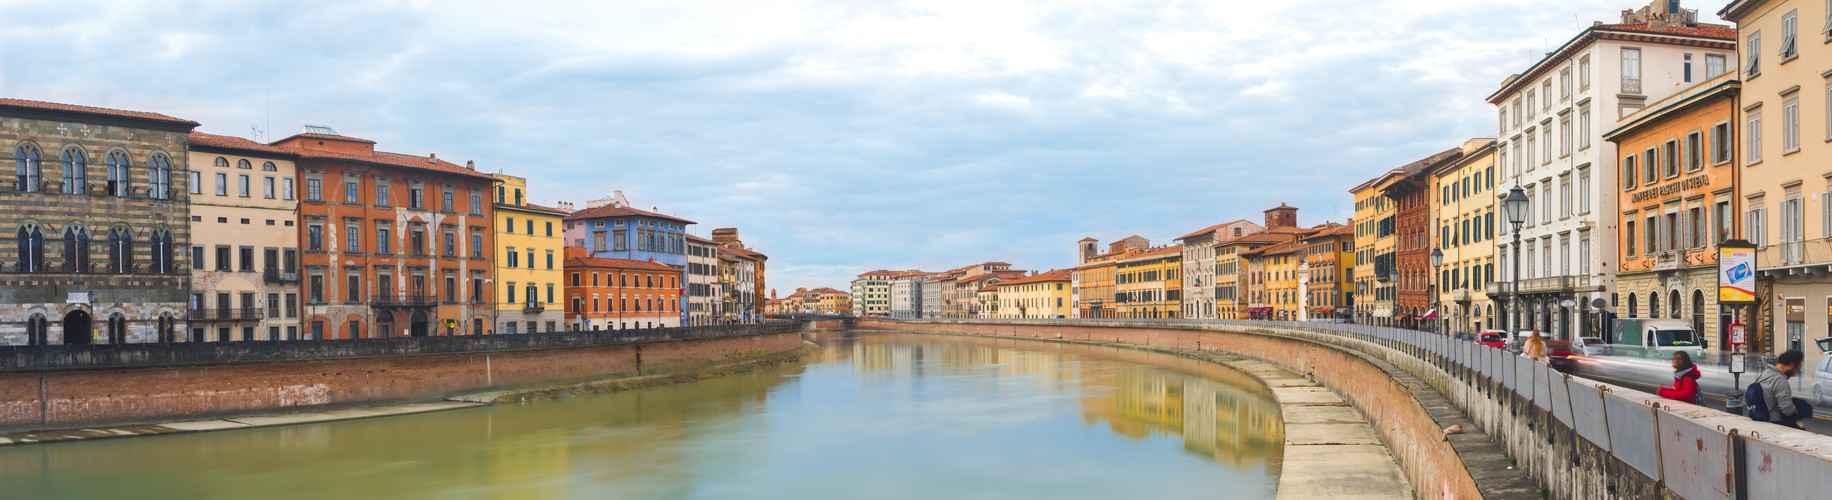 Panorama of Arno River in Pisa, Italy